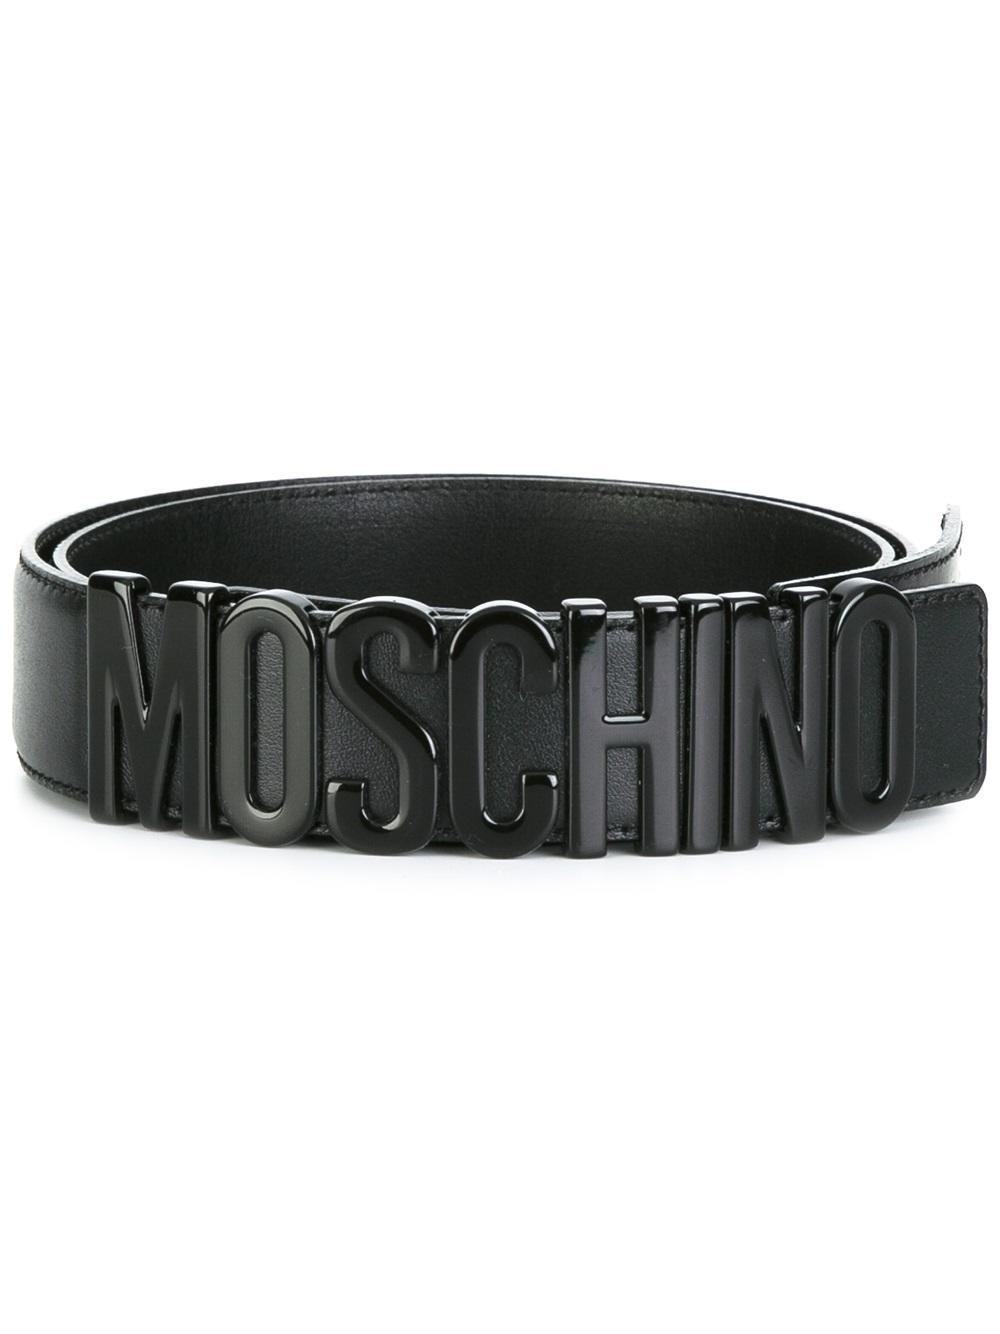 Lyst - Moschino Logo Belt in Black for Men